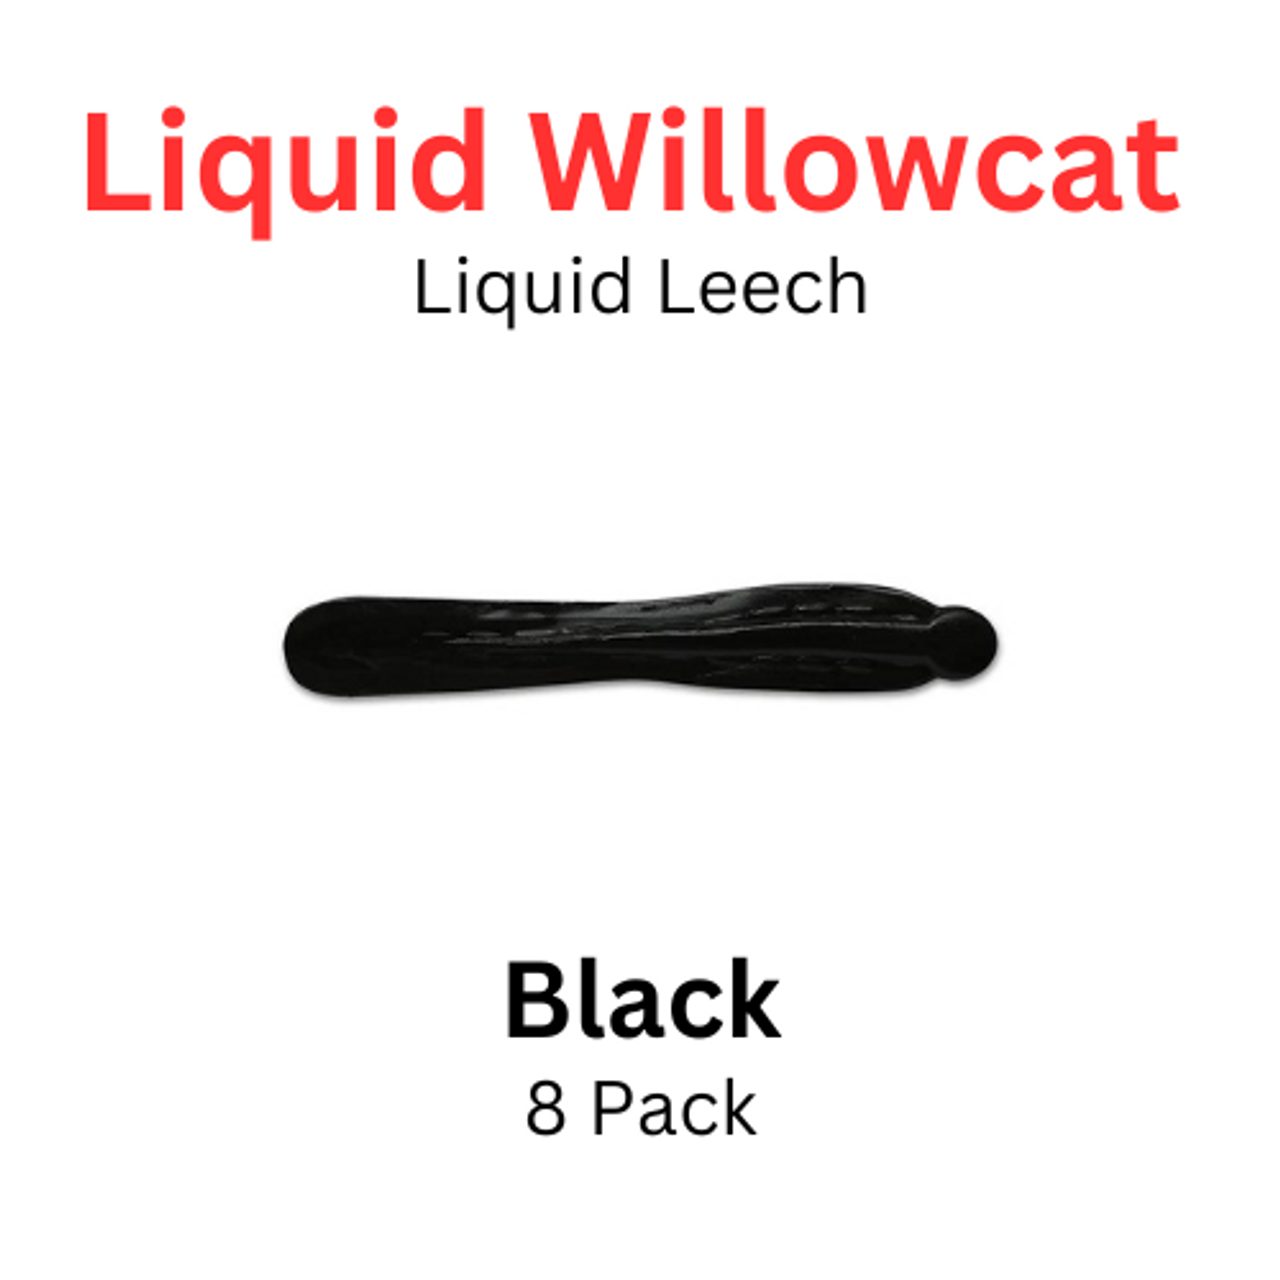 LIQUID WILLOWCAT Soft Plastic LIQUID LEECH BLACK 8 Pack